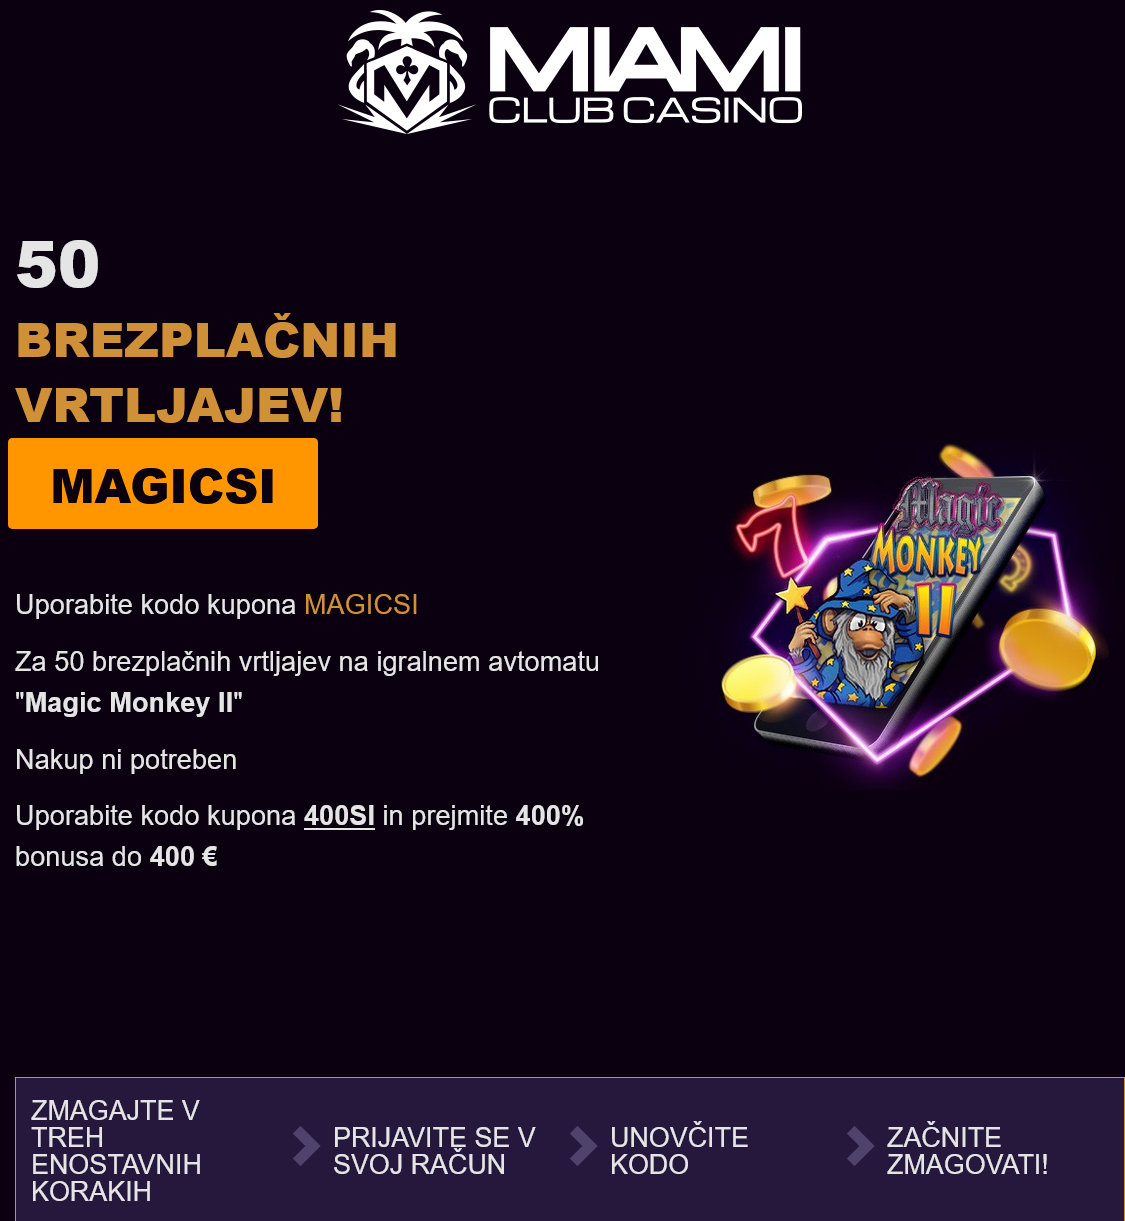 Miami Club SI 50 Free Spins
                                        (Slovenia)